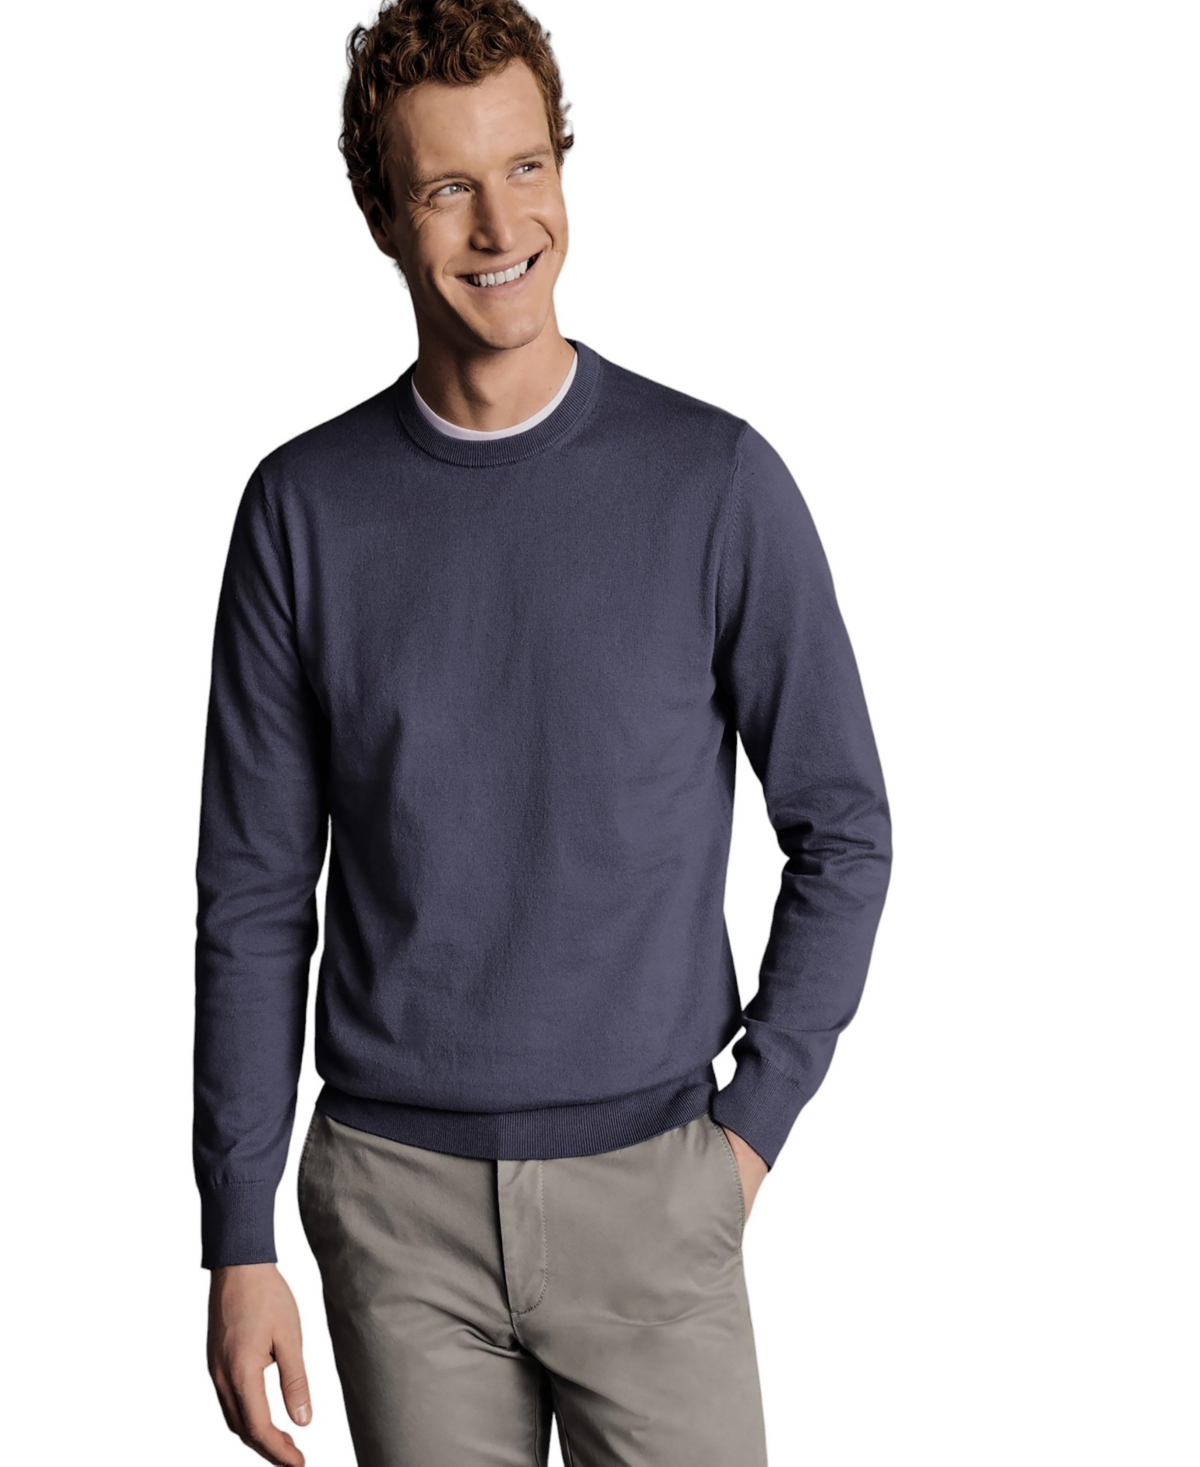 Men's Combed Cotton Crew Neck Sweater - Heather blue